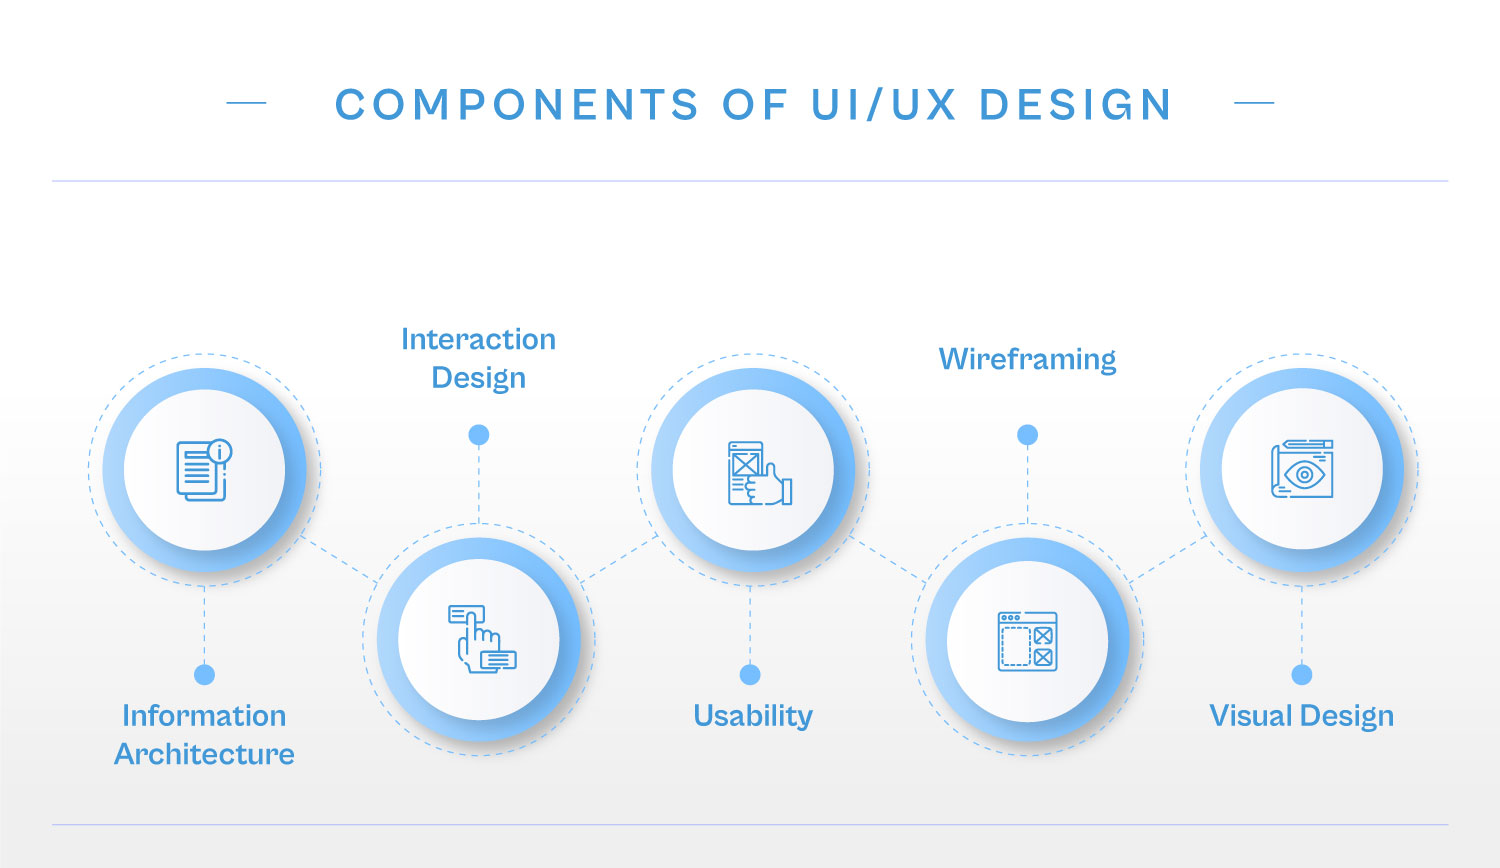 <img src="Components-of-UI-UX-Design.jpg" alt="Major Components of UI/UX Design">